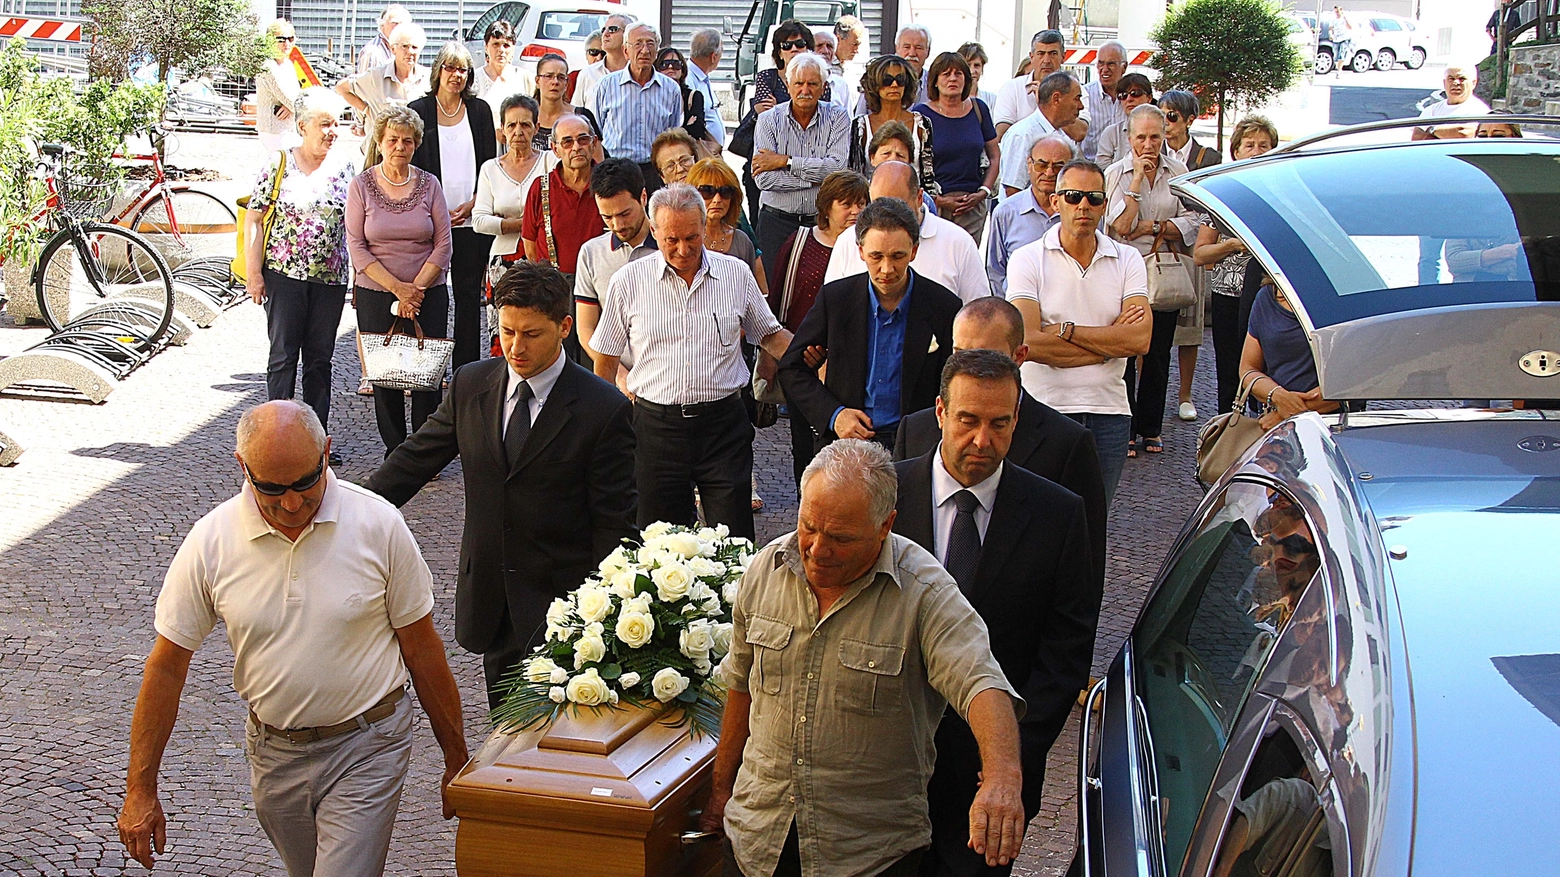 I funerali di Rossella Berra (National Press/Carlo Orlandi)